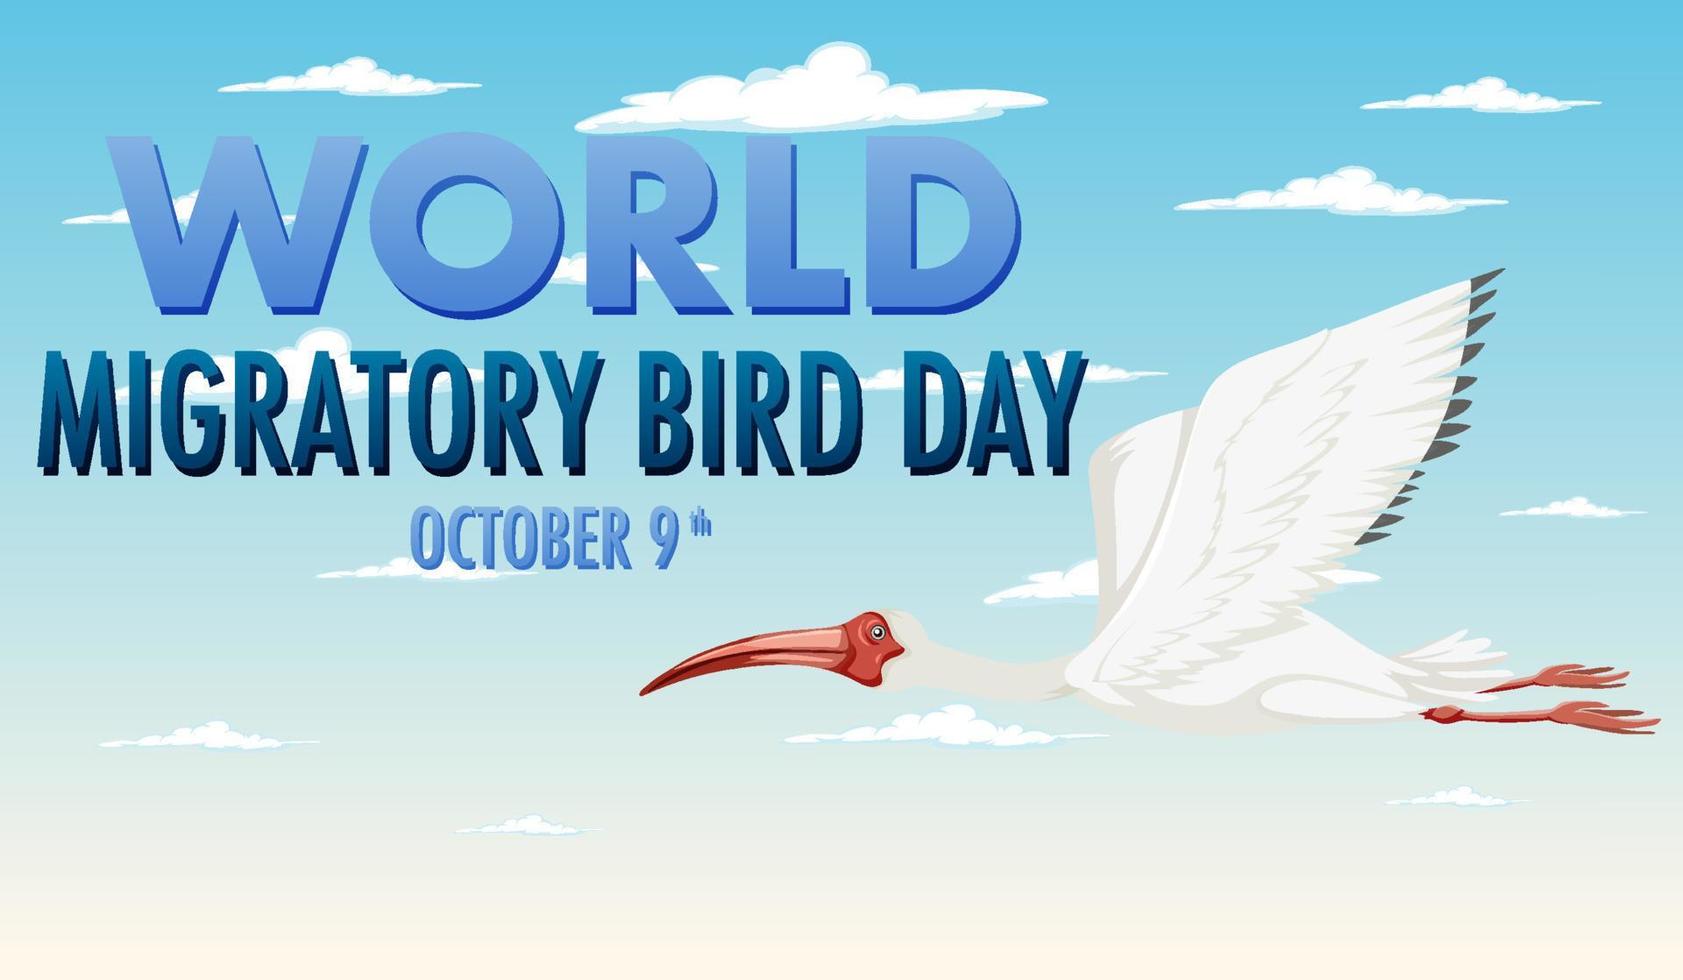 World Migratory Bird Day Banner Template vector